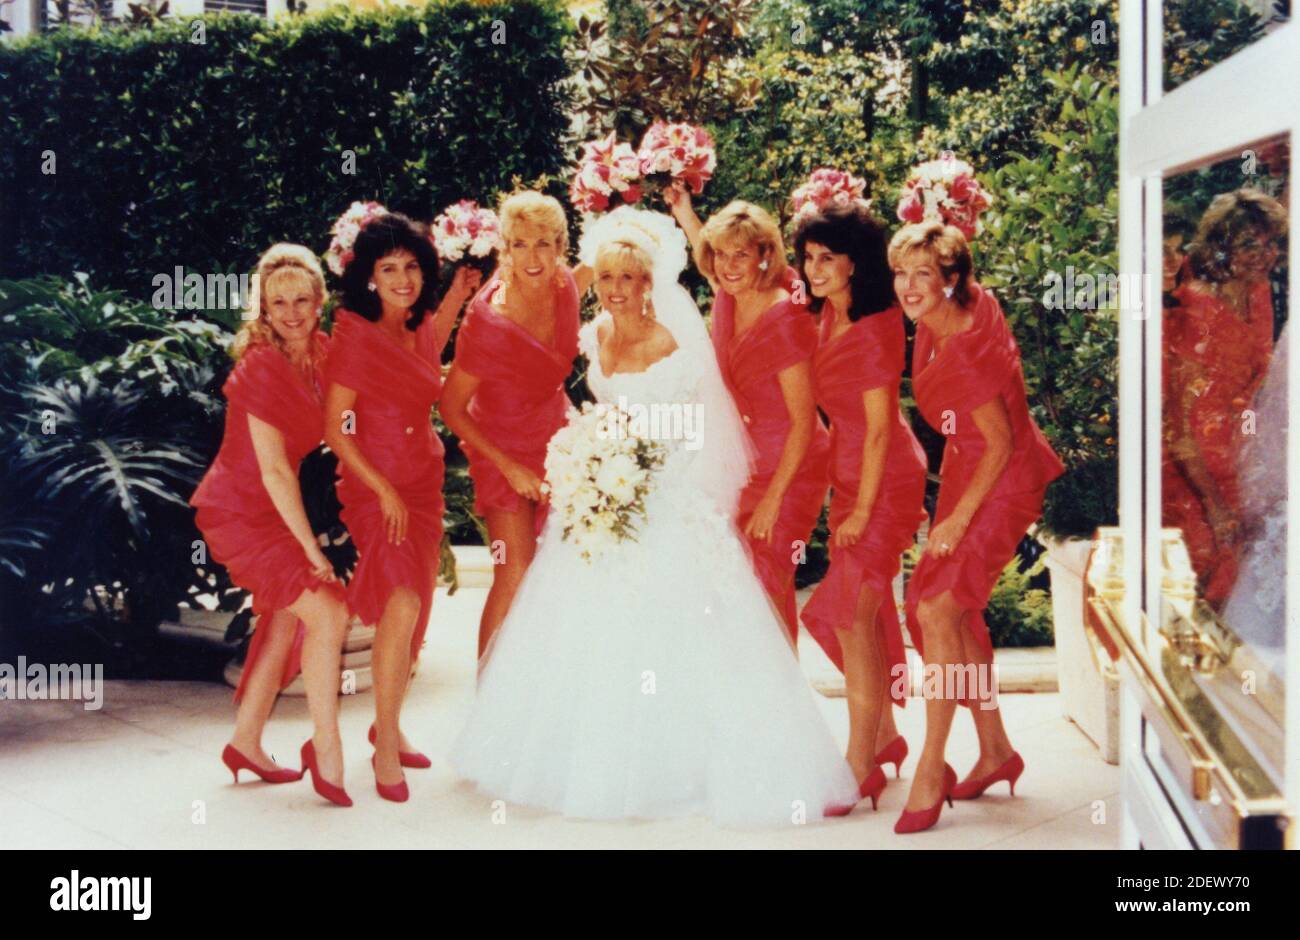 American tennis player Tracy Austin's wedding, 1993 Stock Photo